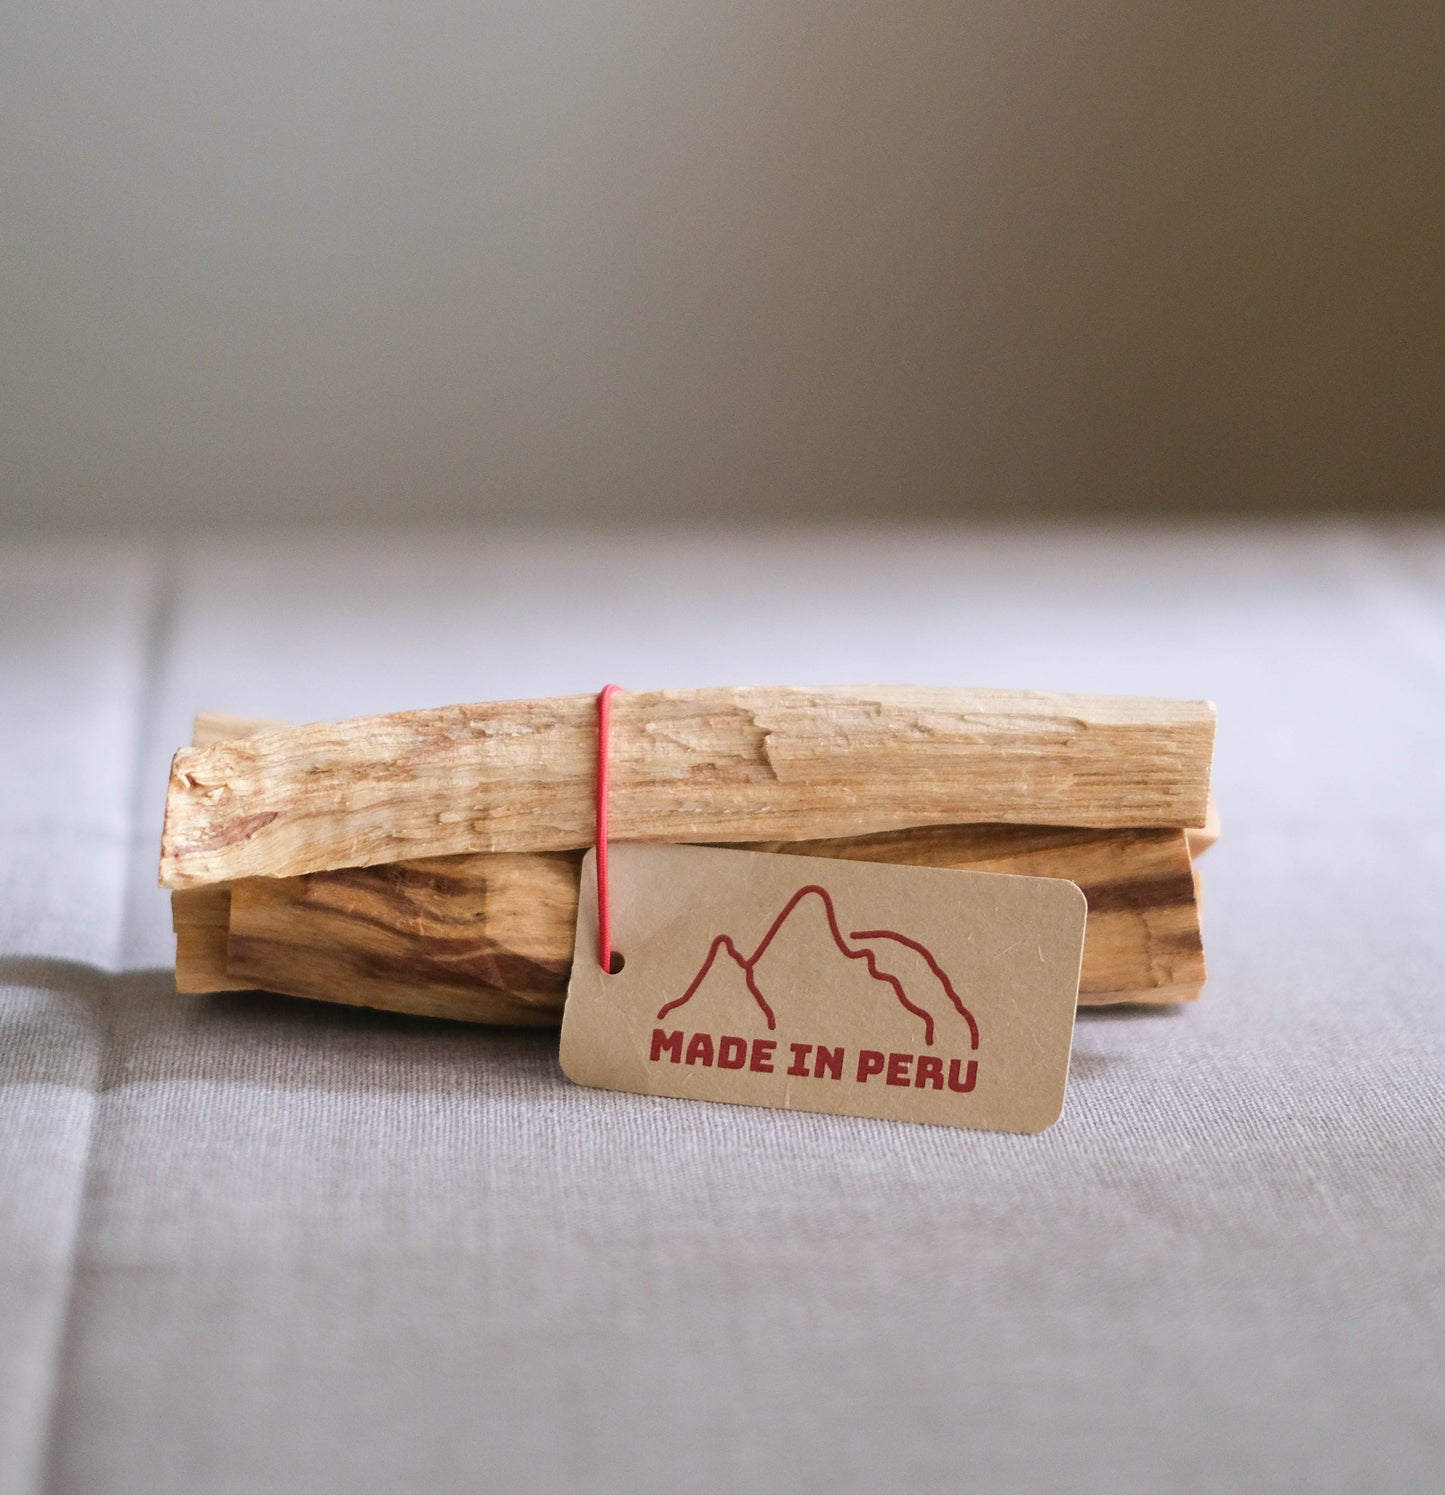 Made in Peru - Palo Santo Stick